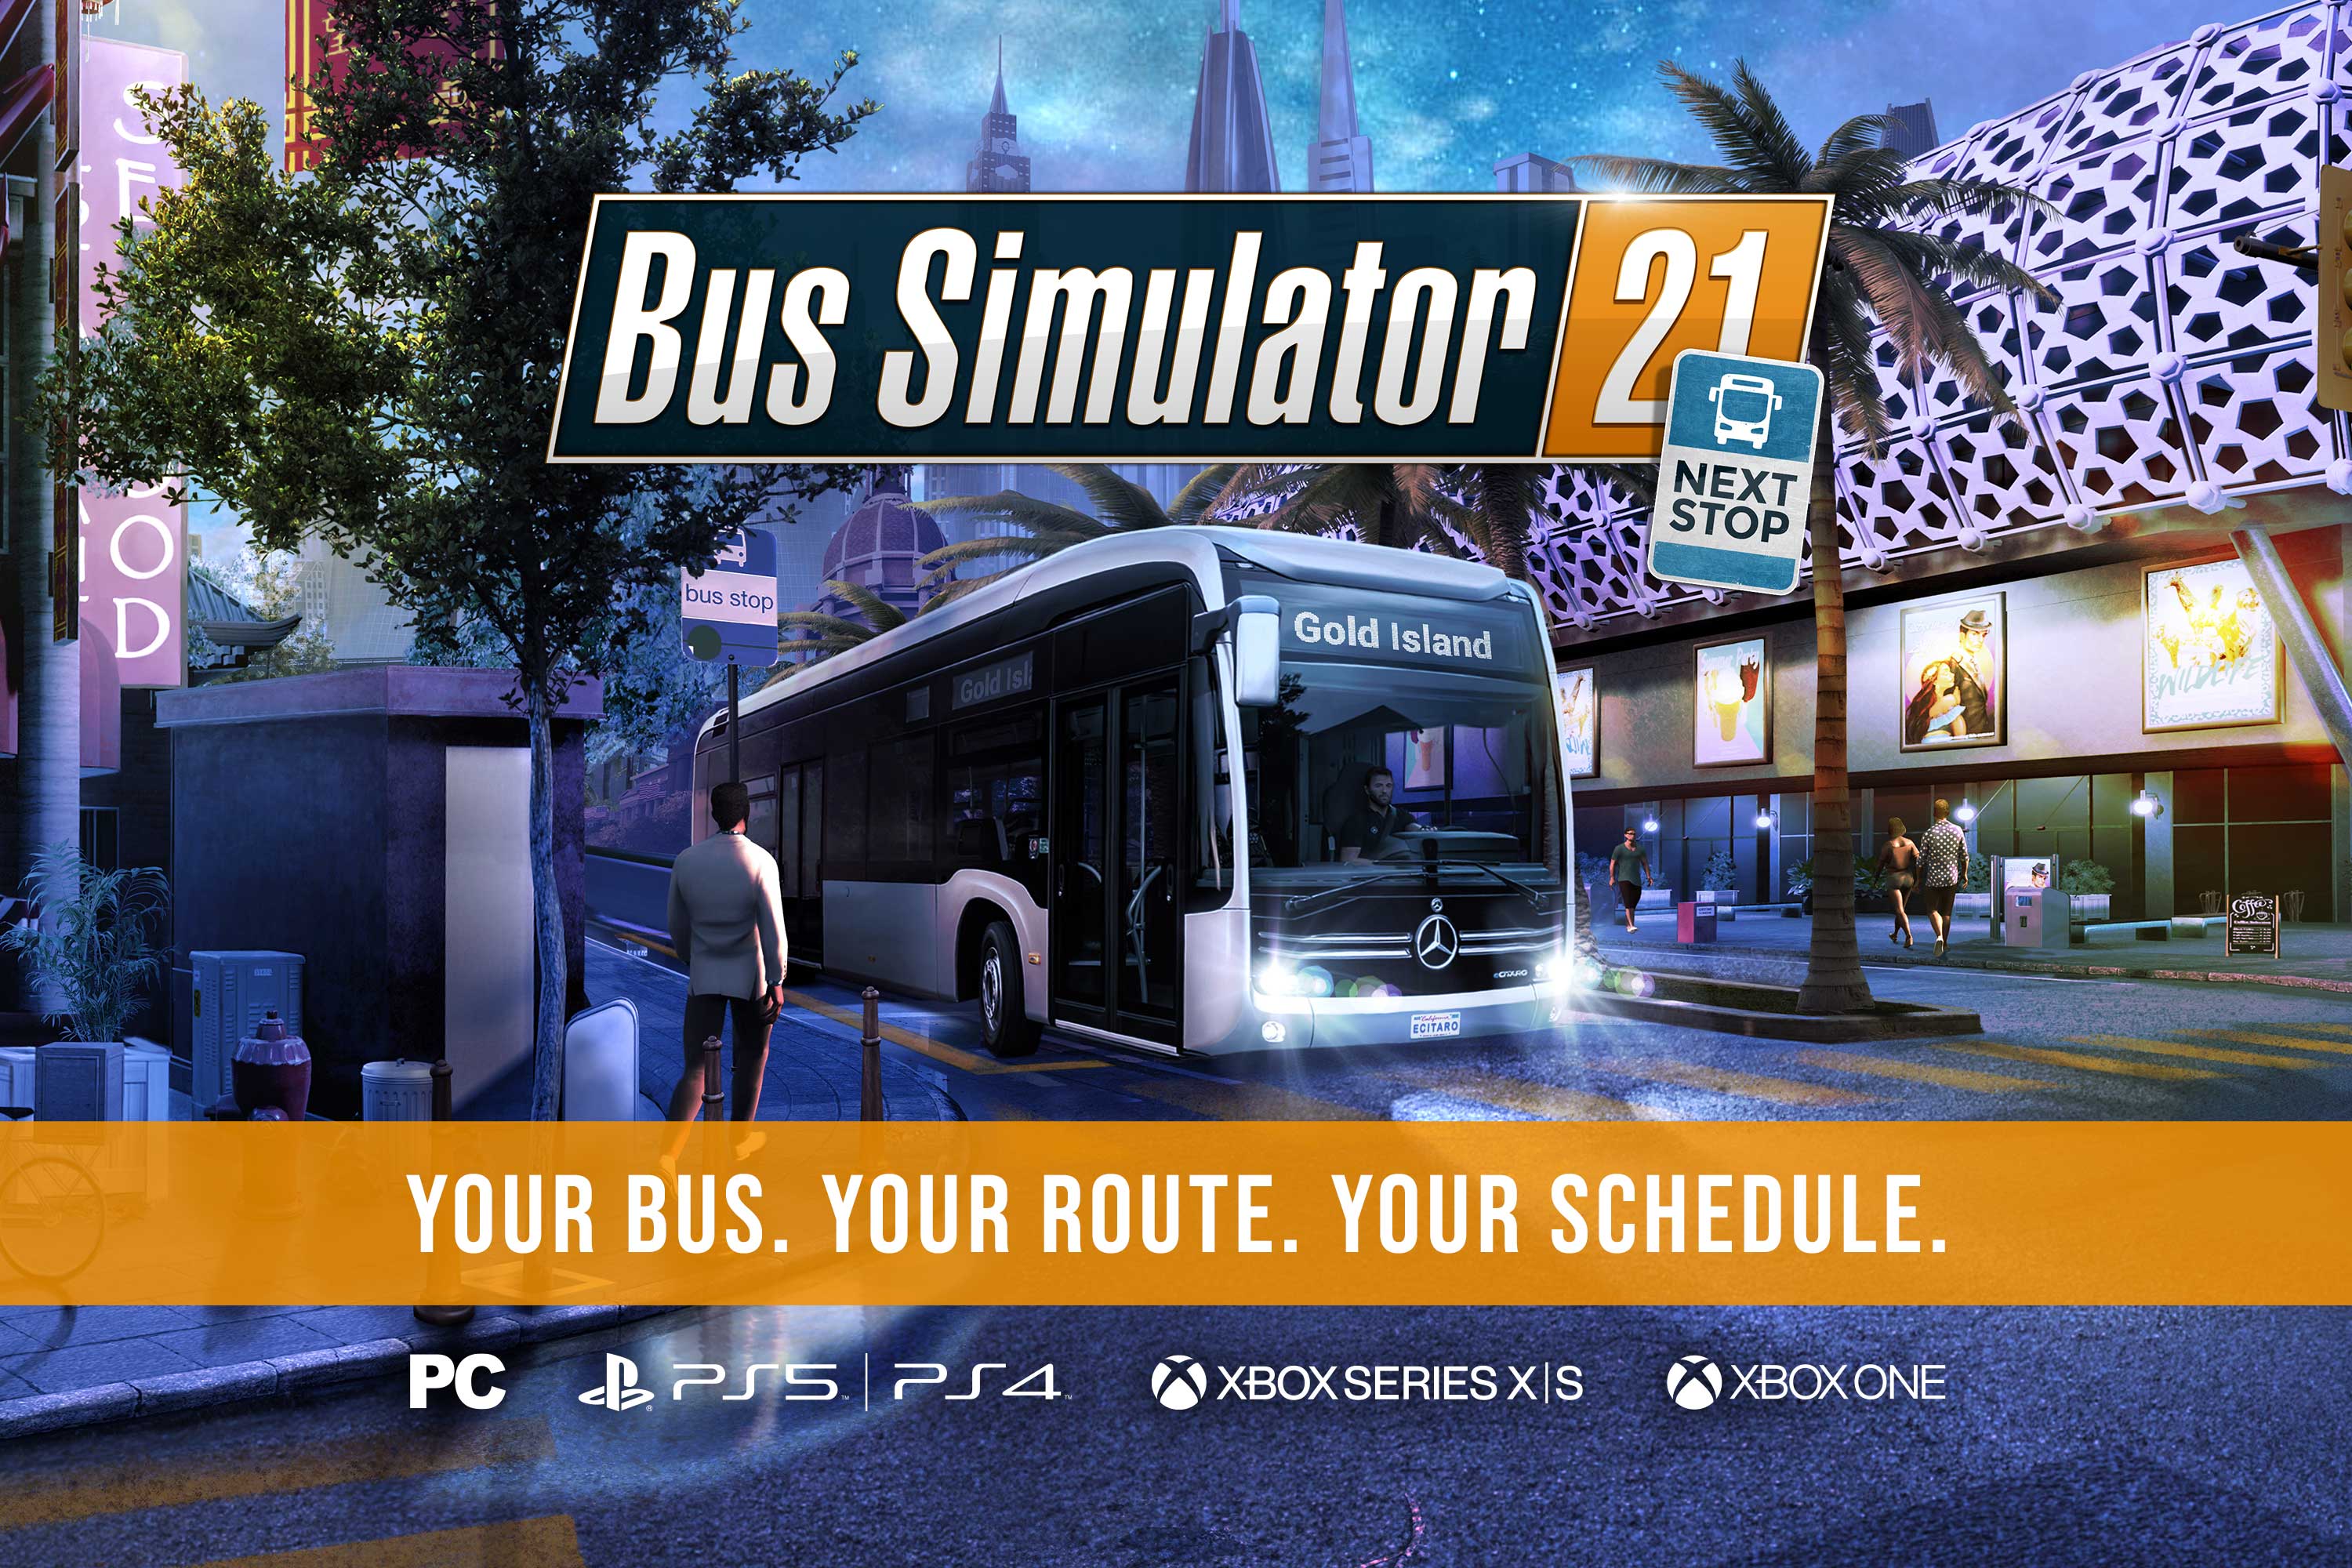 license key bus simulator 18